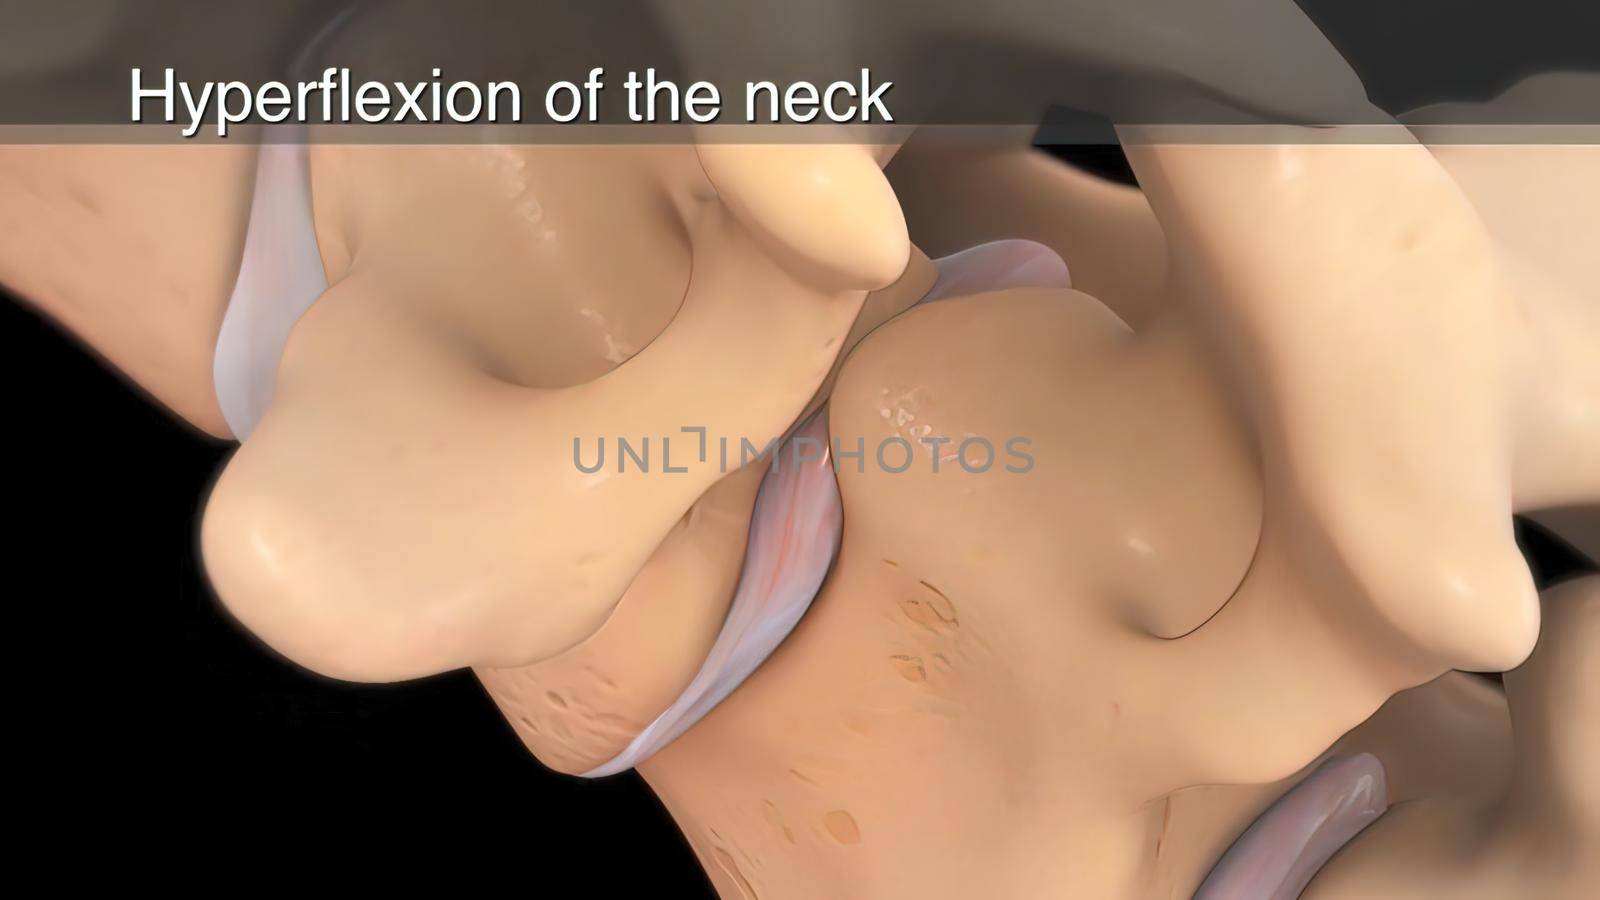 hyperflexion of the neck 3d illustration